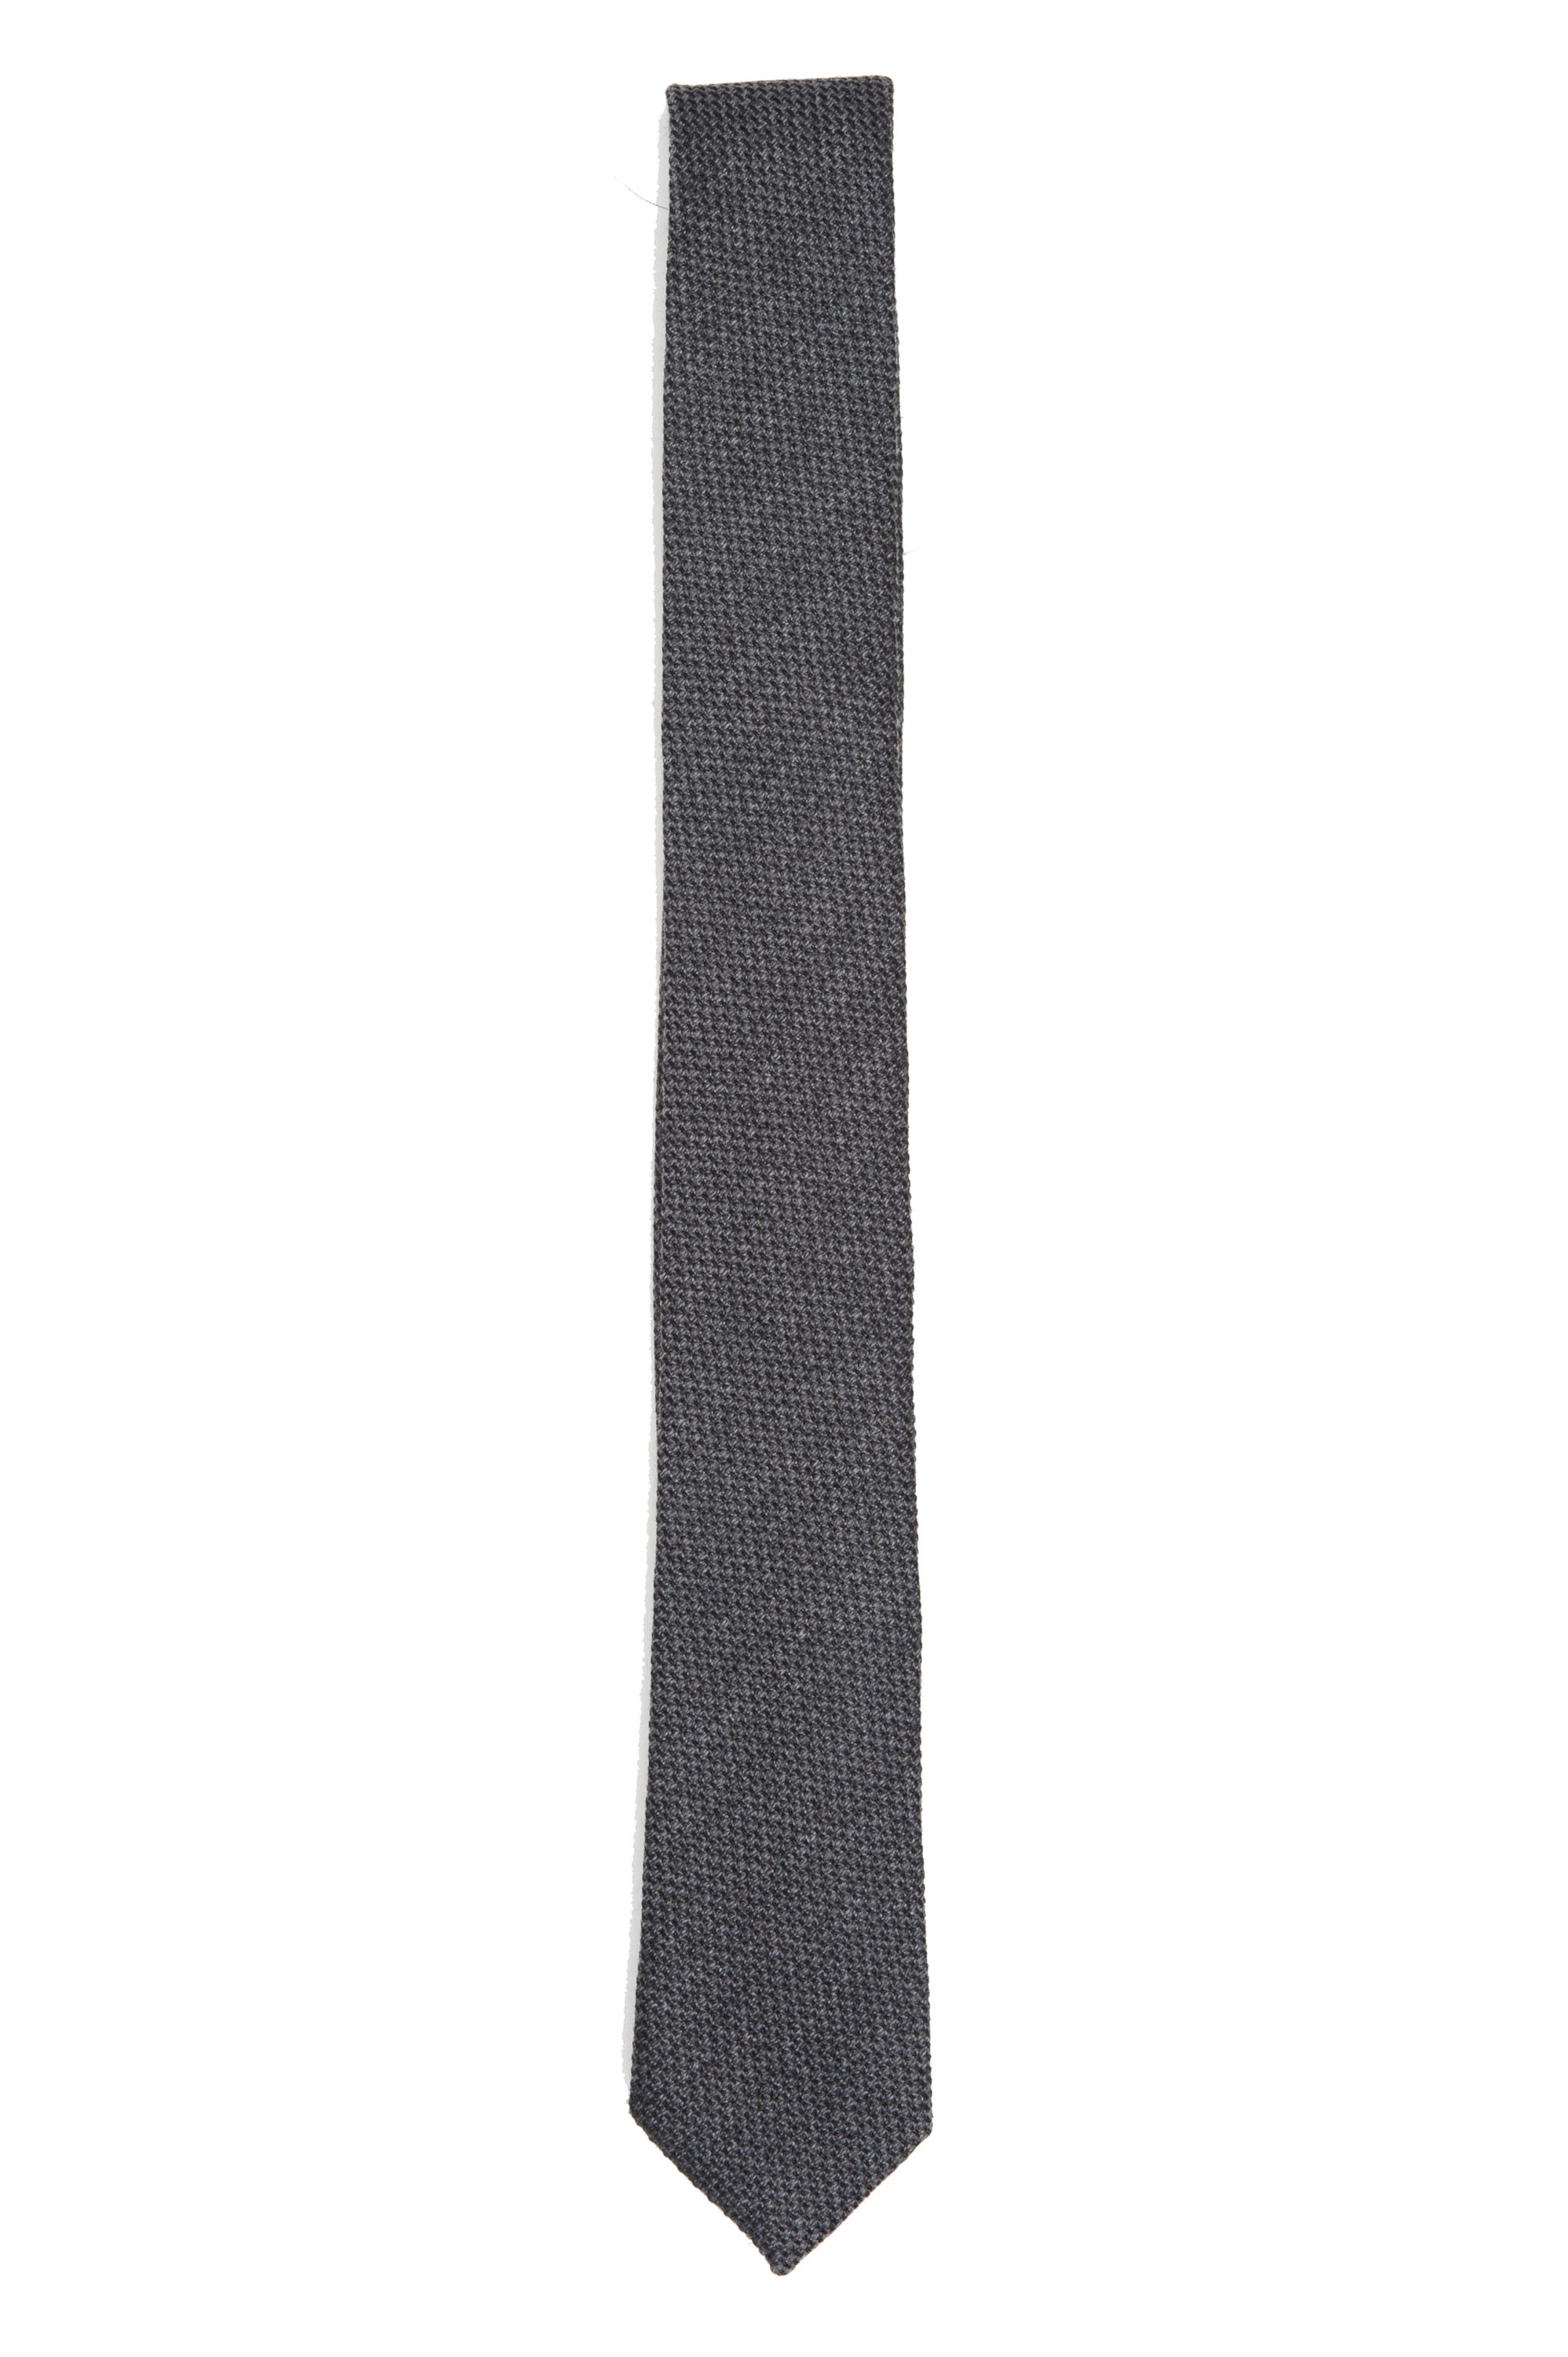 SBU 01570 Cravatta classica skinny in lana e seta grigia 01